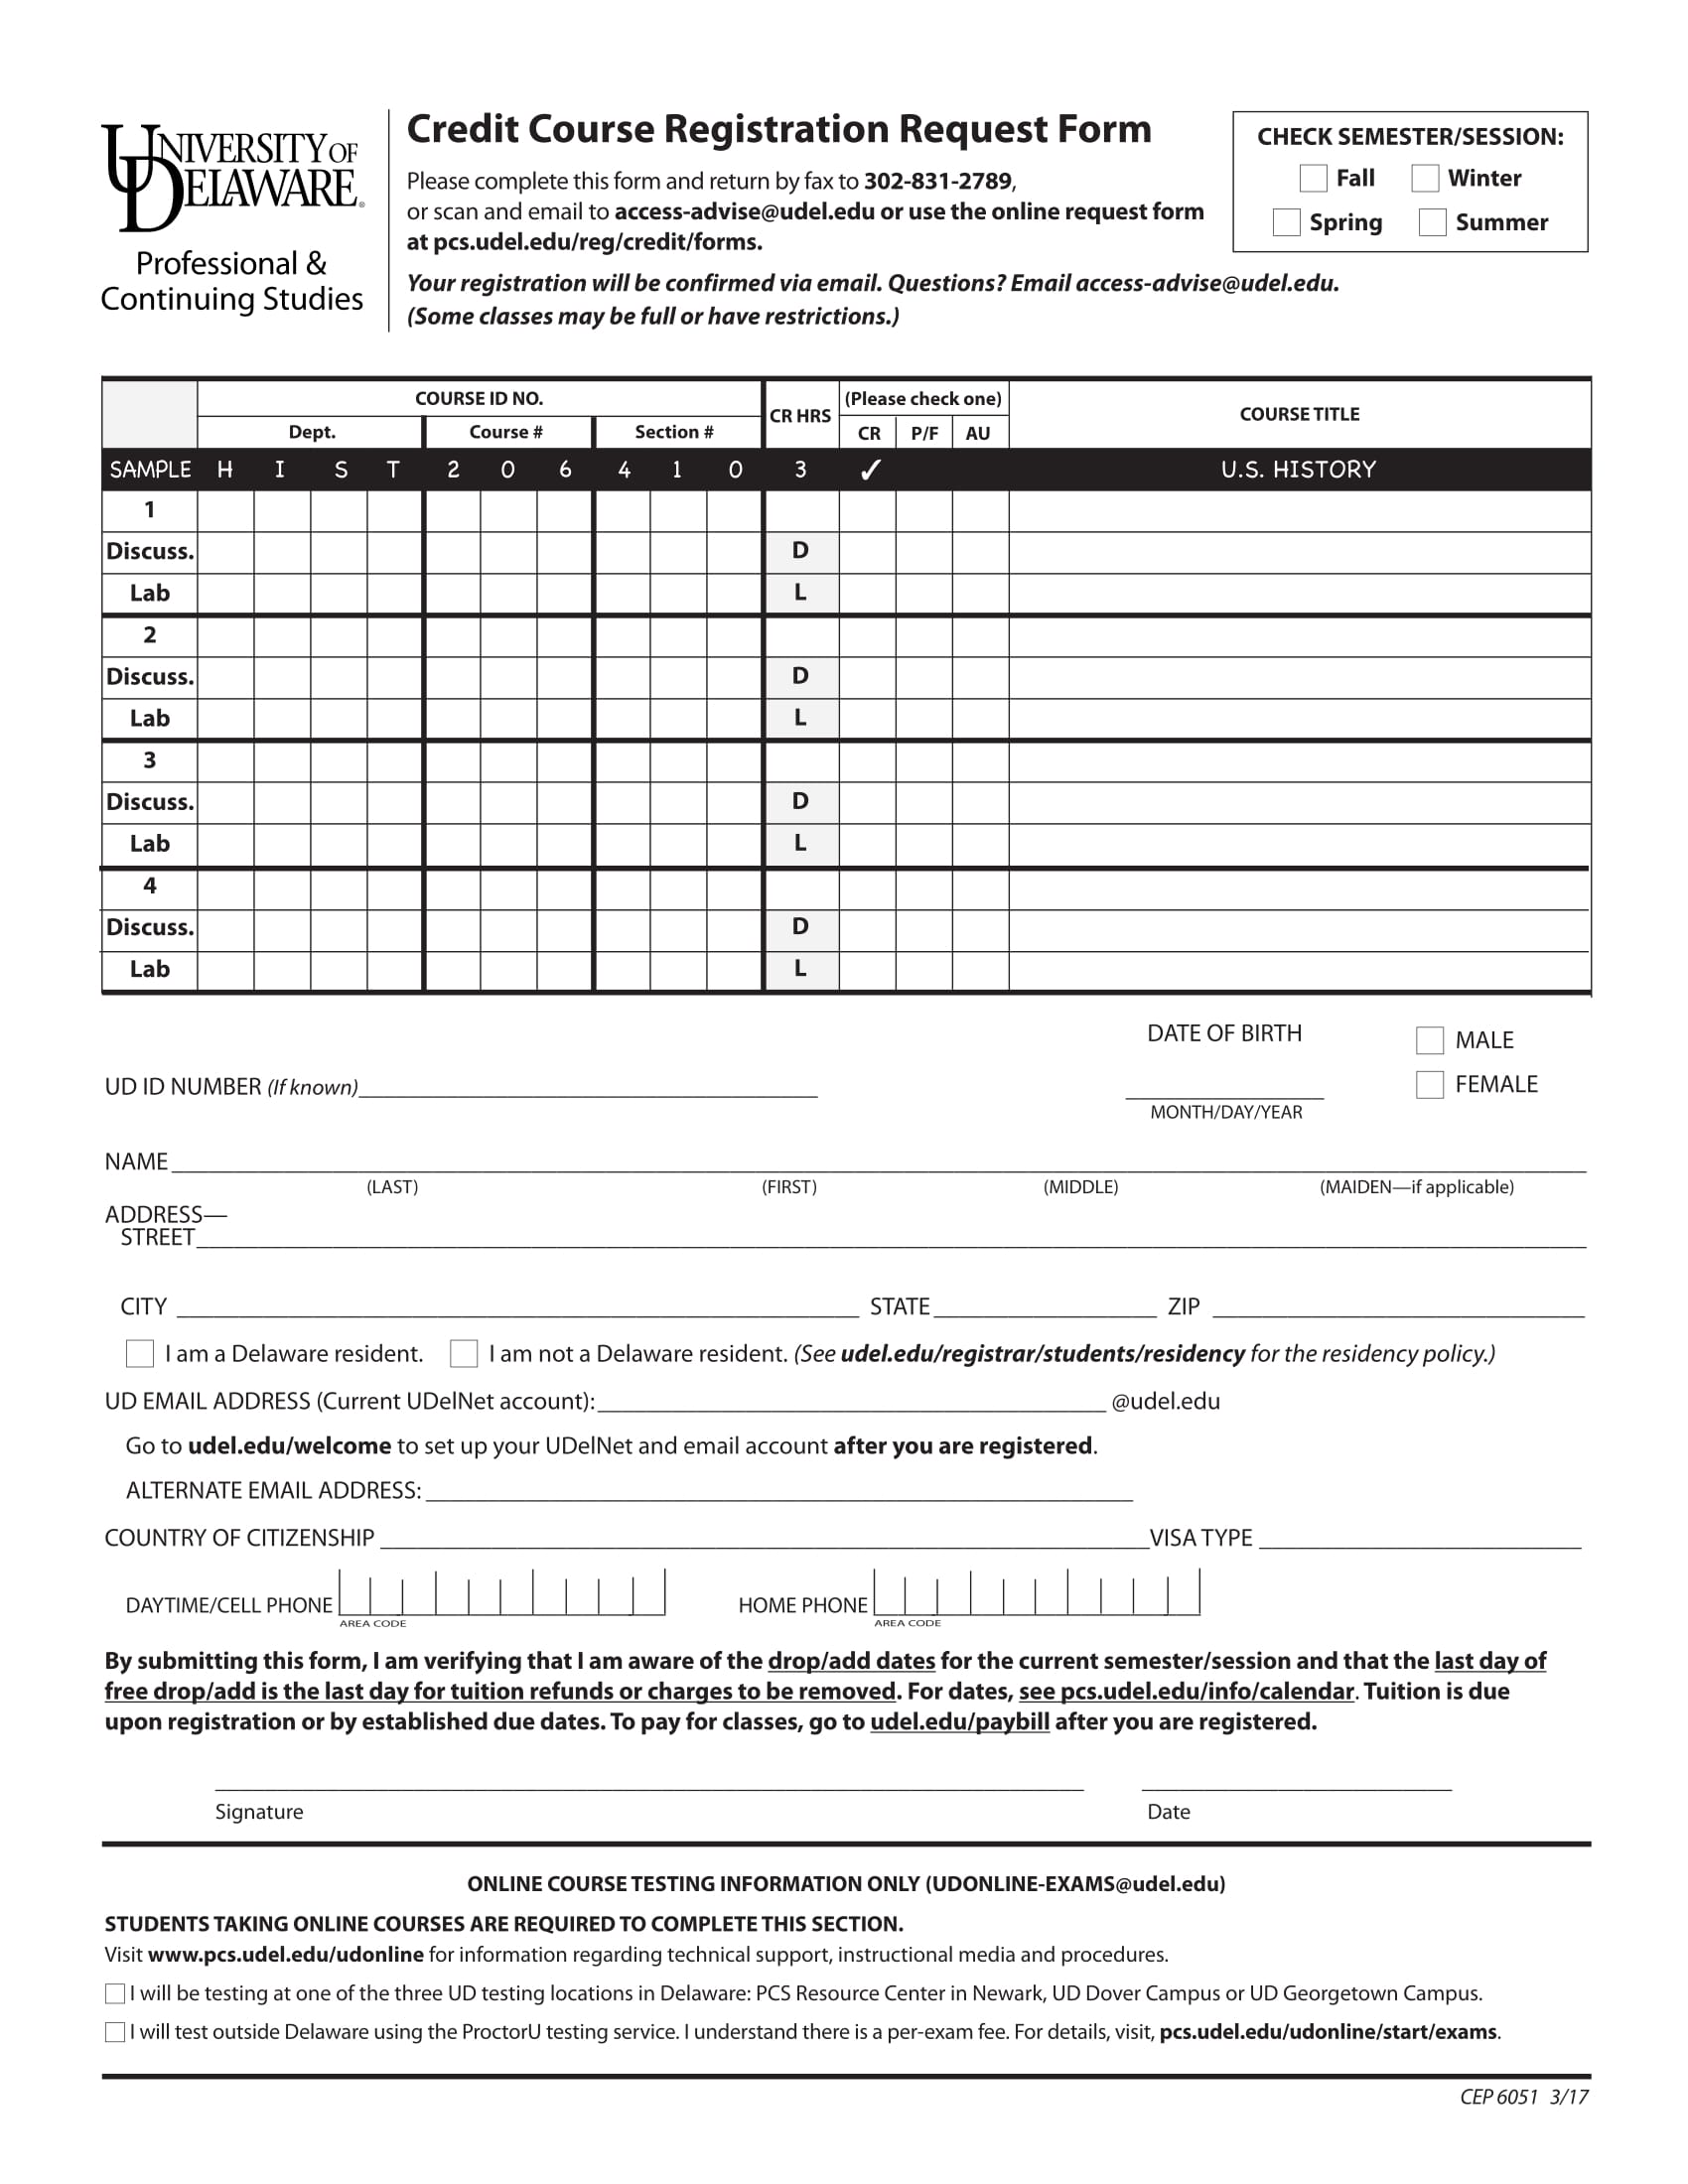 credit course registration request form 1